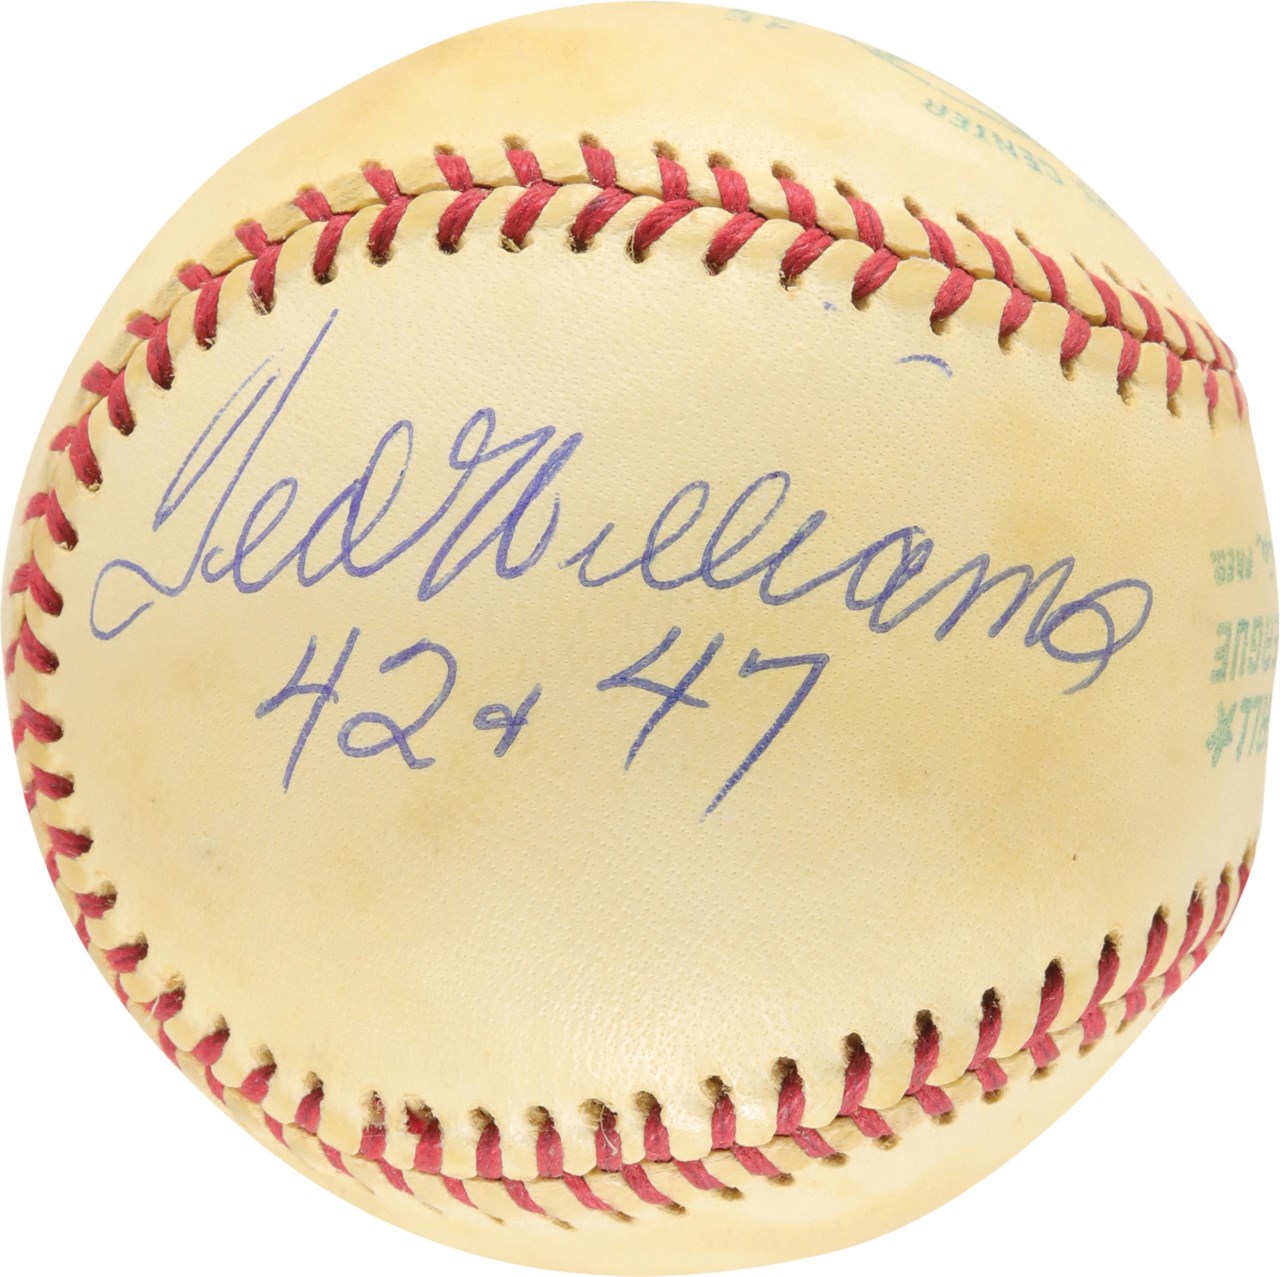 Ted Williams Triple Crown "42 & 47" Single Signed Baseball (JSA)